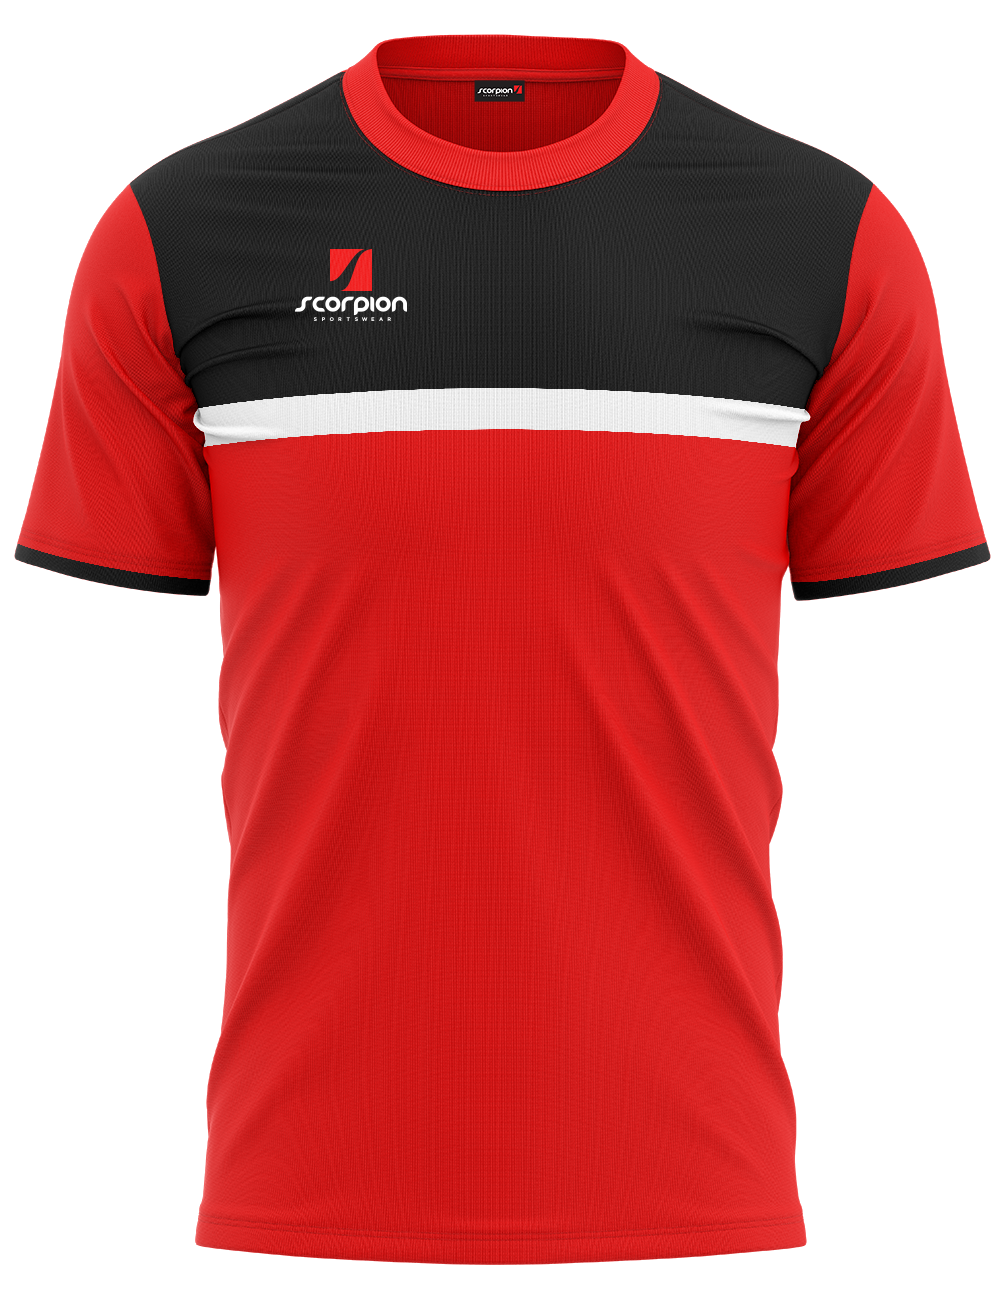 Scorpion Training T-Shirts - Red/Black/White